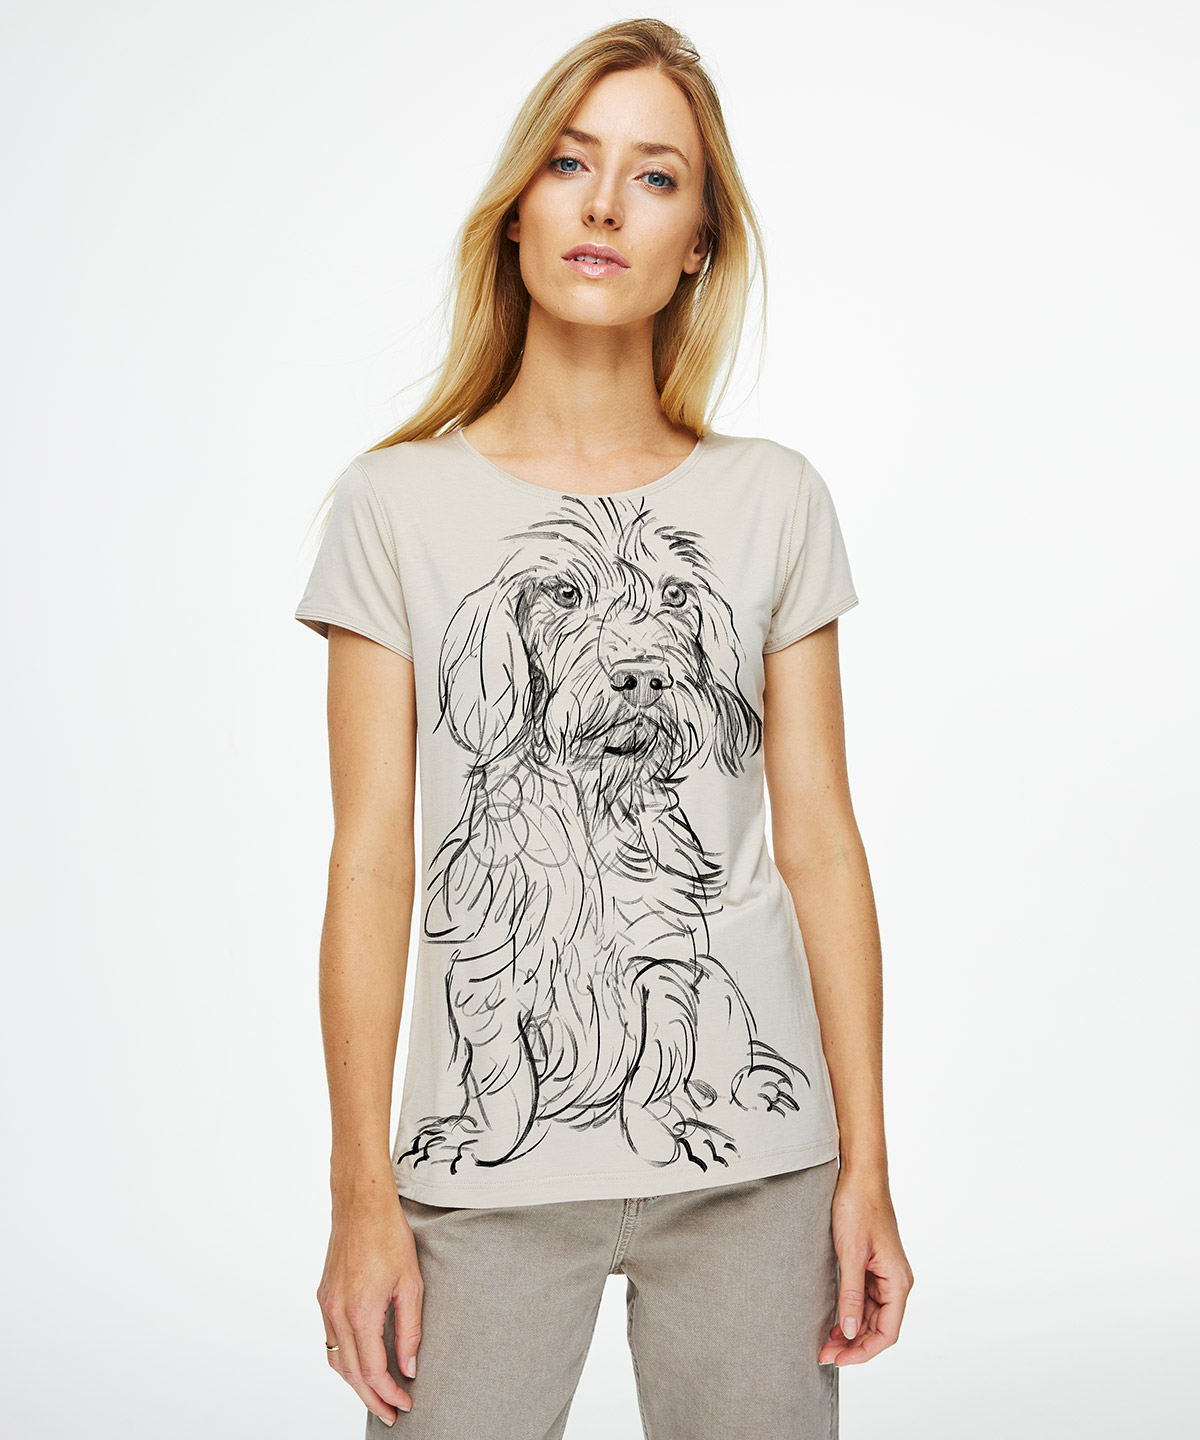 Wirehaired Dachshund hummus t-shirt woman